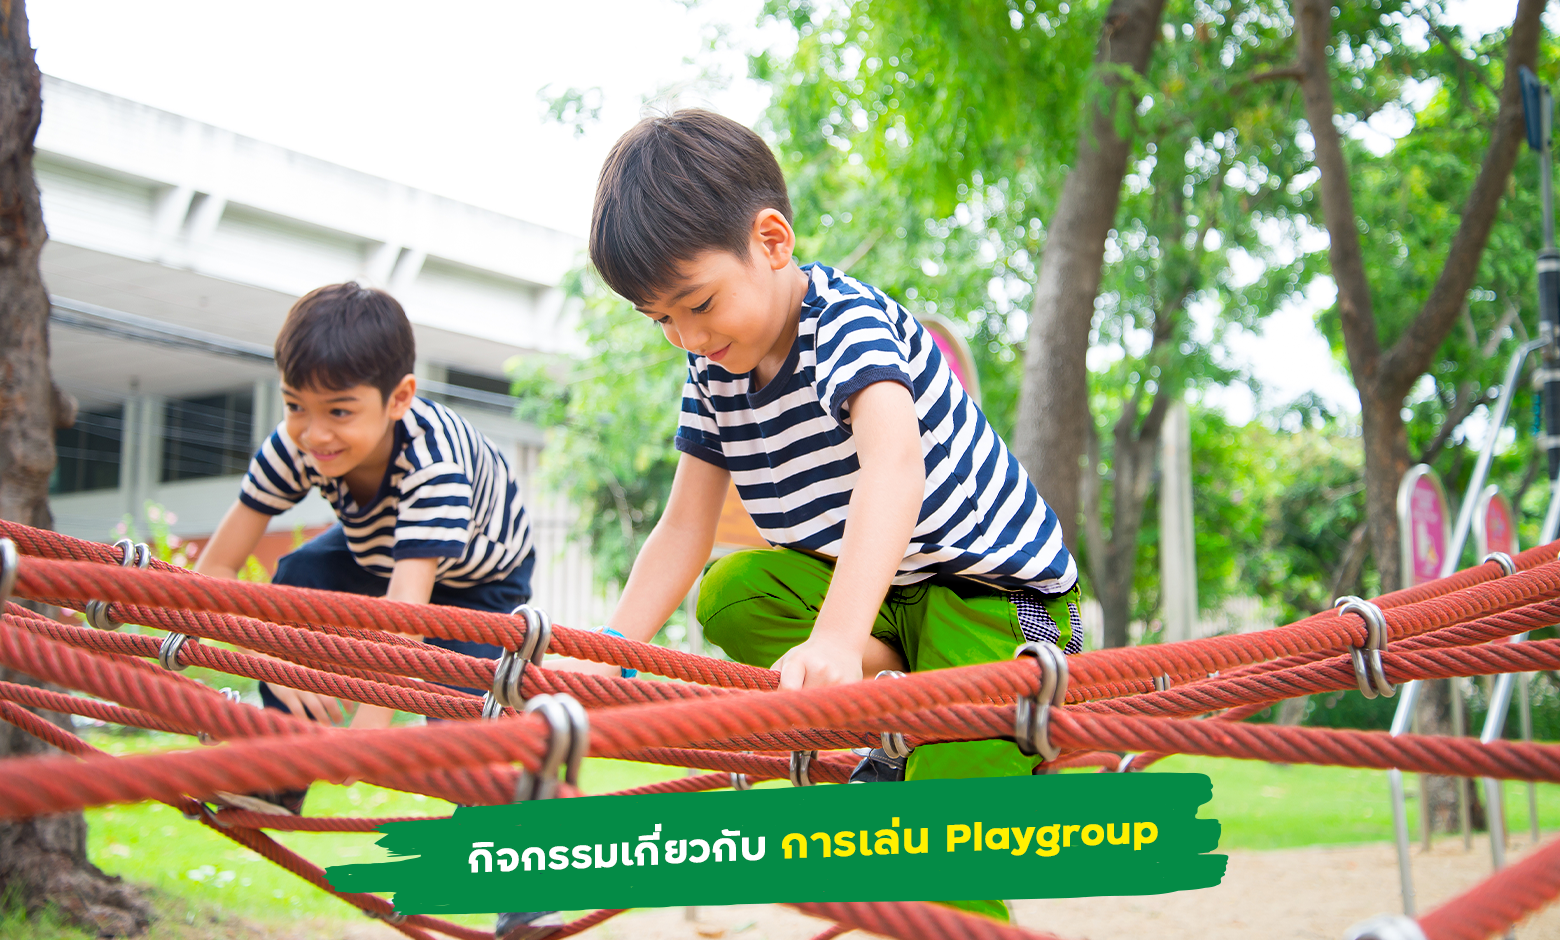 Play ground - กิจกรรมช่วงปิดเทอมที่เด็กได้สร้างปฏิสัมพันธ์กับเพื่อนวัยใกล้เคียงกัน